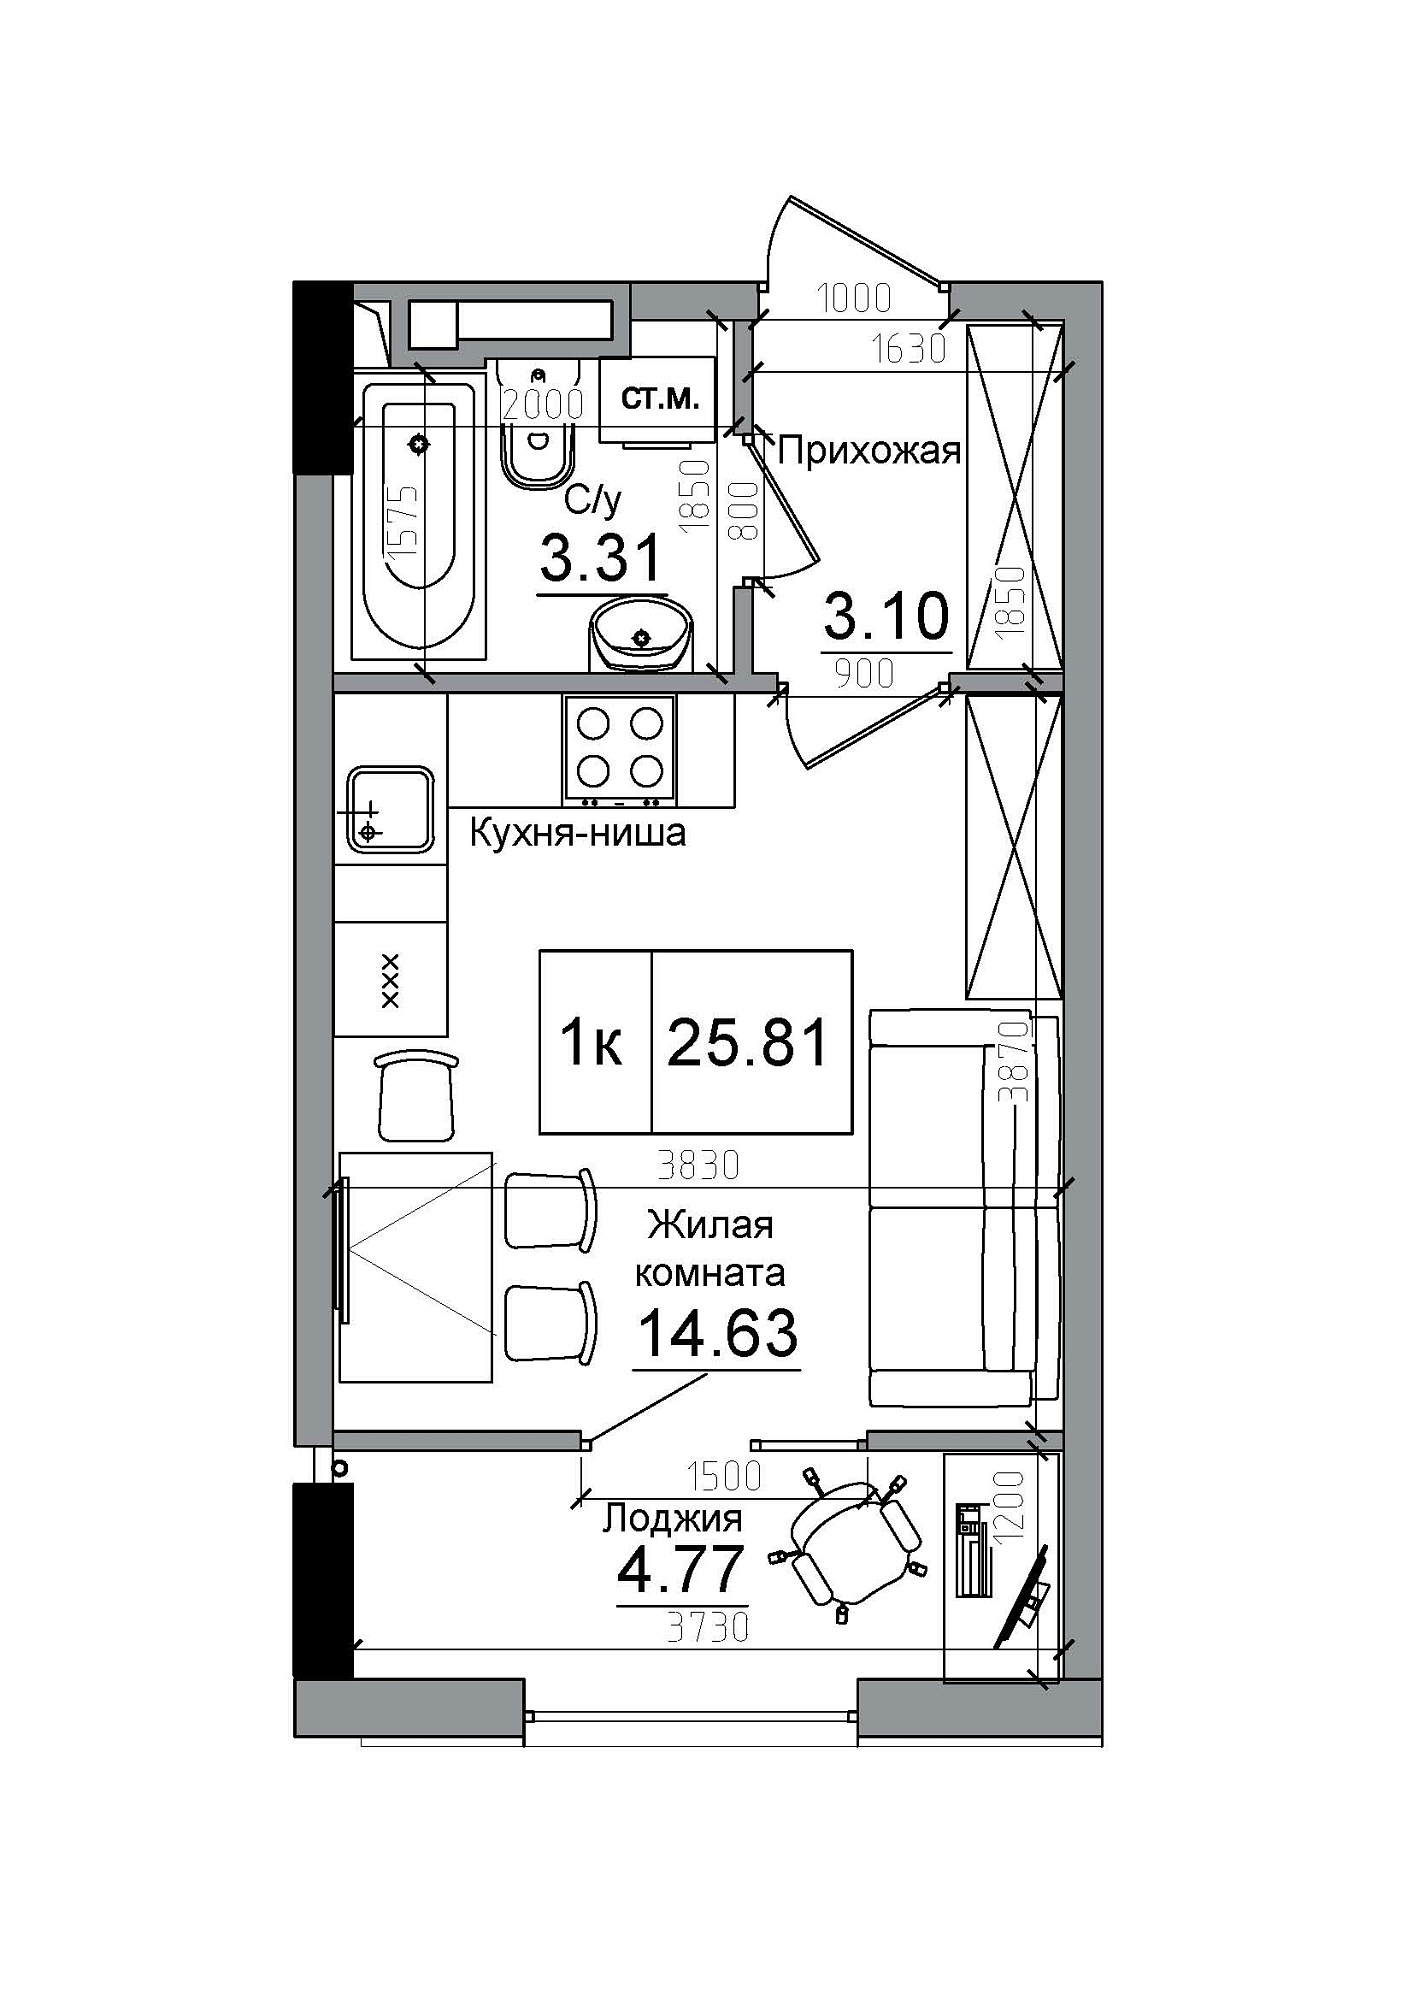 Планировка Smart-квартира площей 25.81м2, AB-12-10/00013.